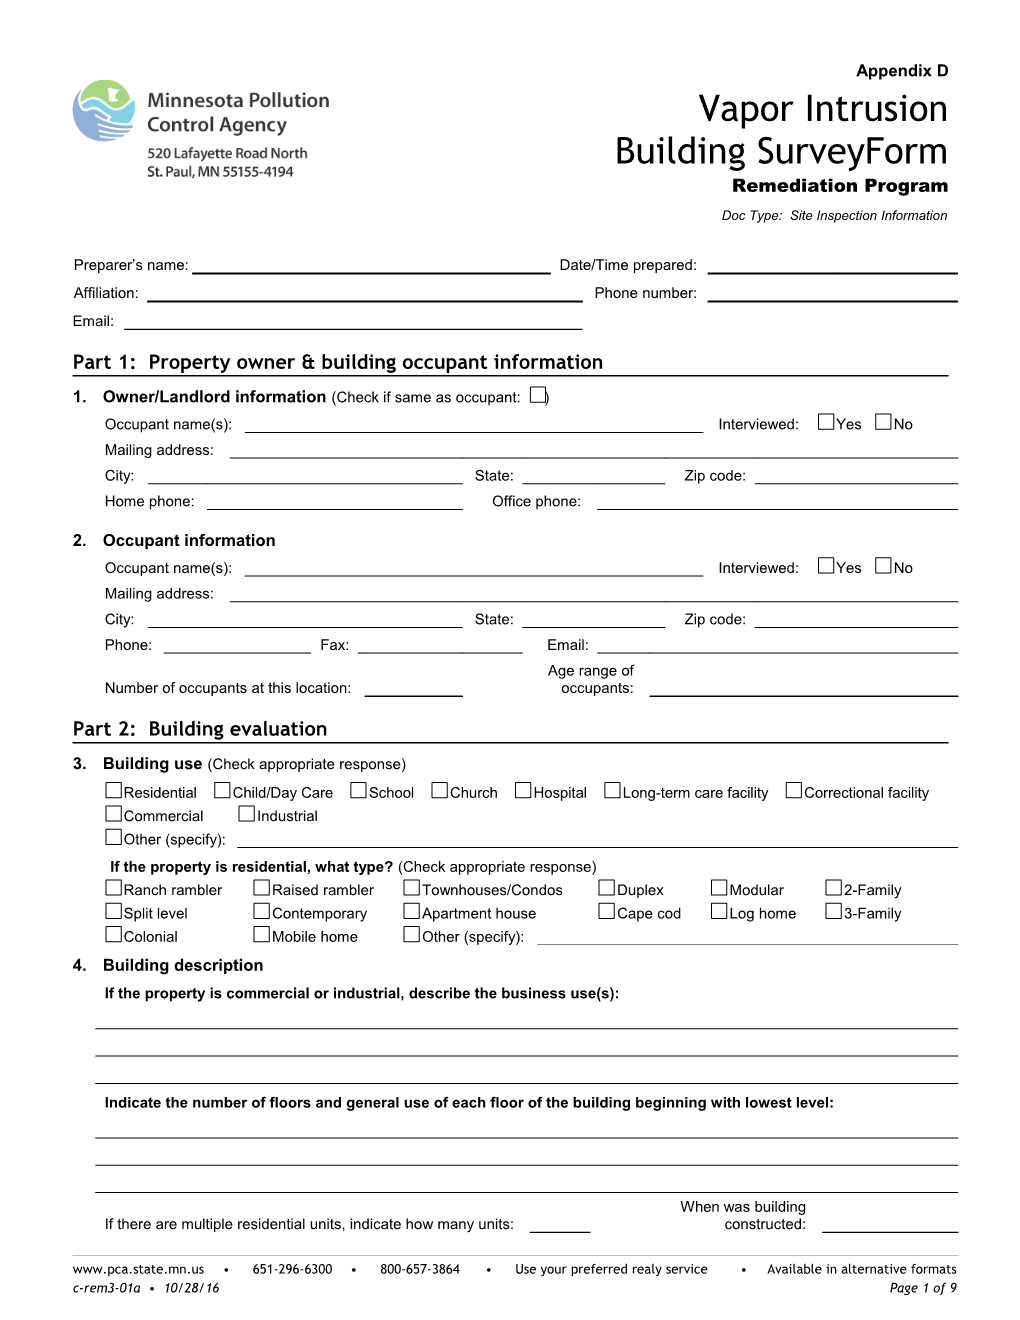 Vapor Intrusion Interior Building Survey Form